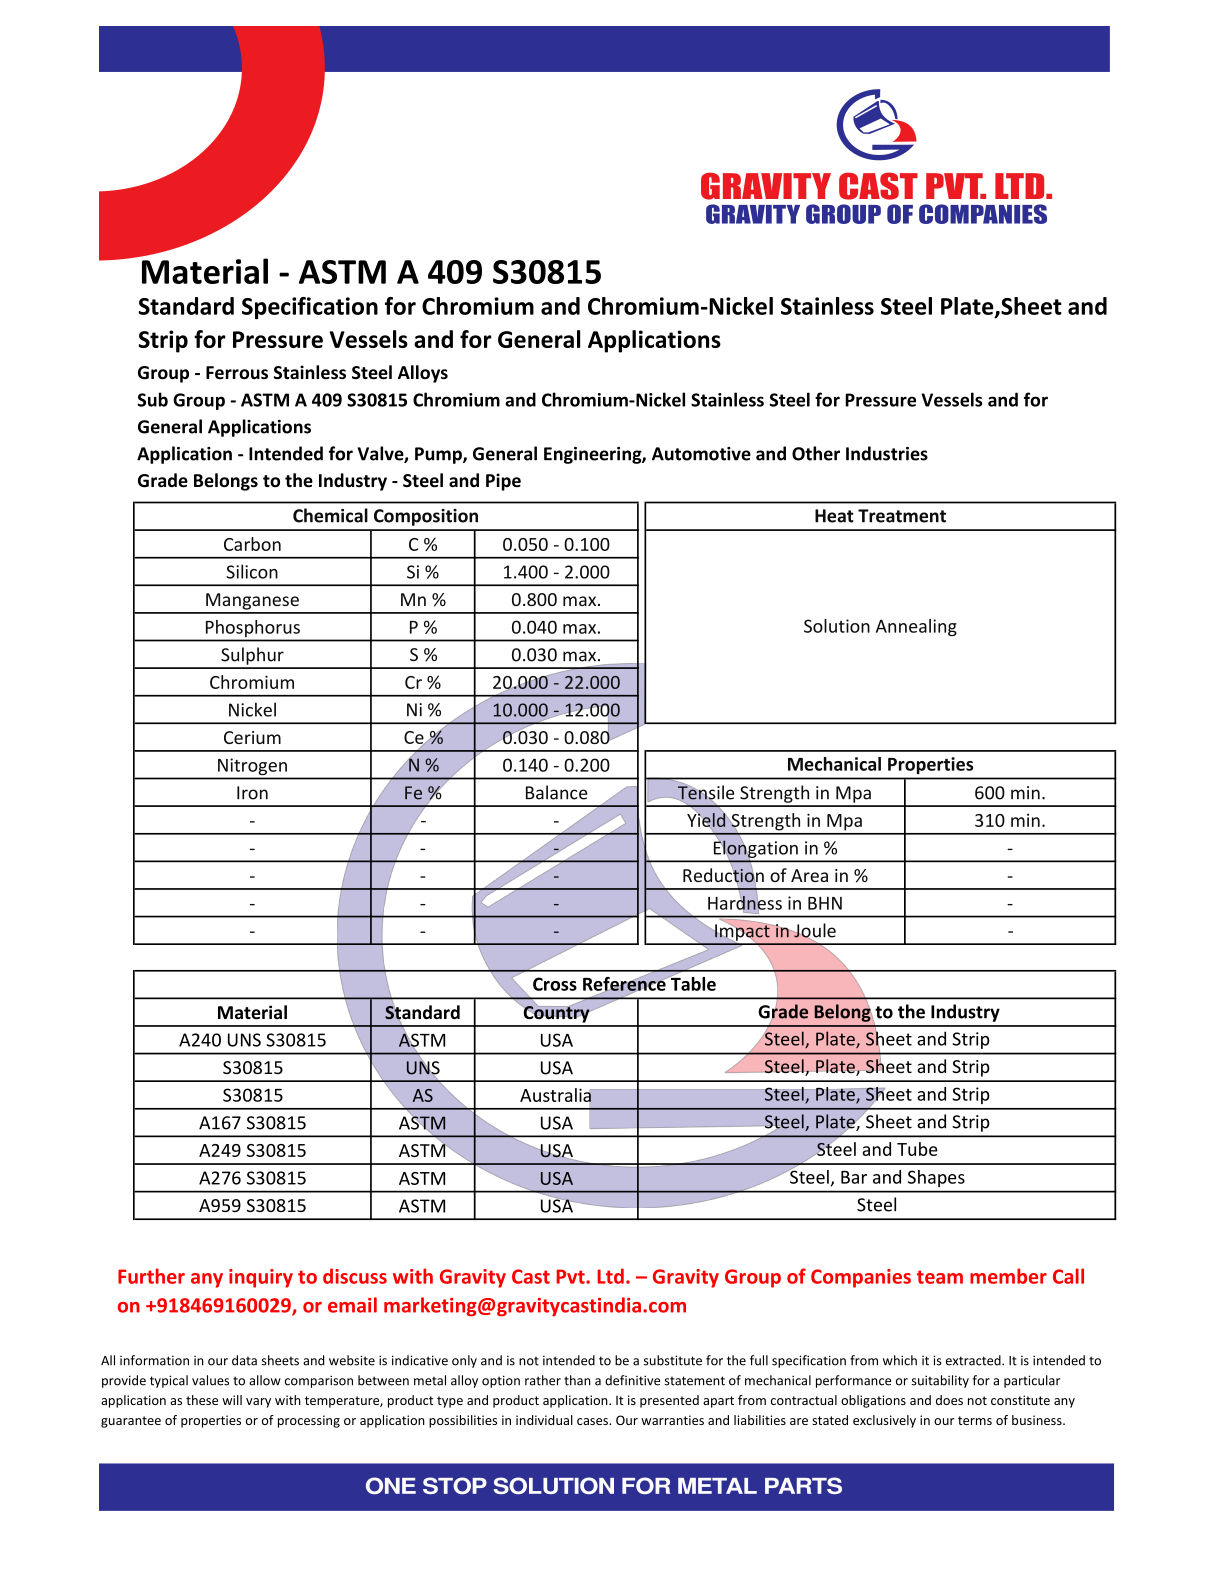 ASTM A 409 S30815.pdf